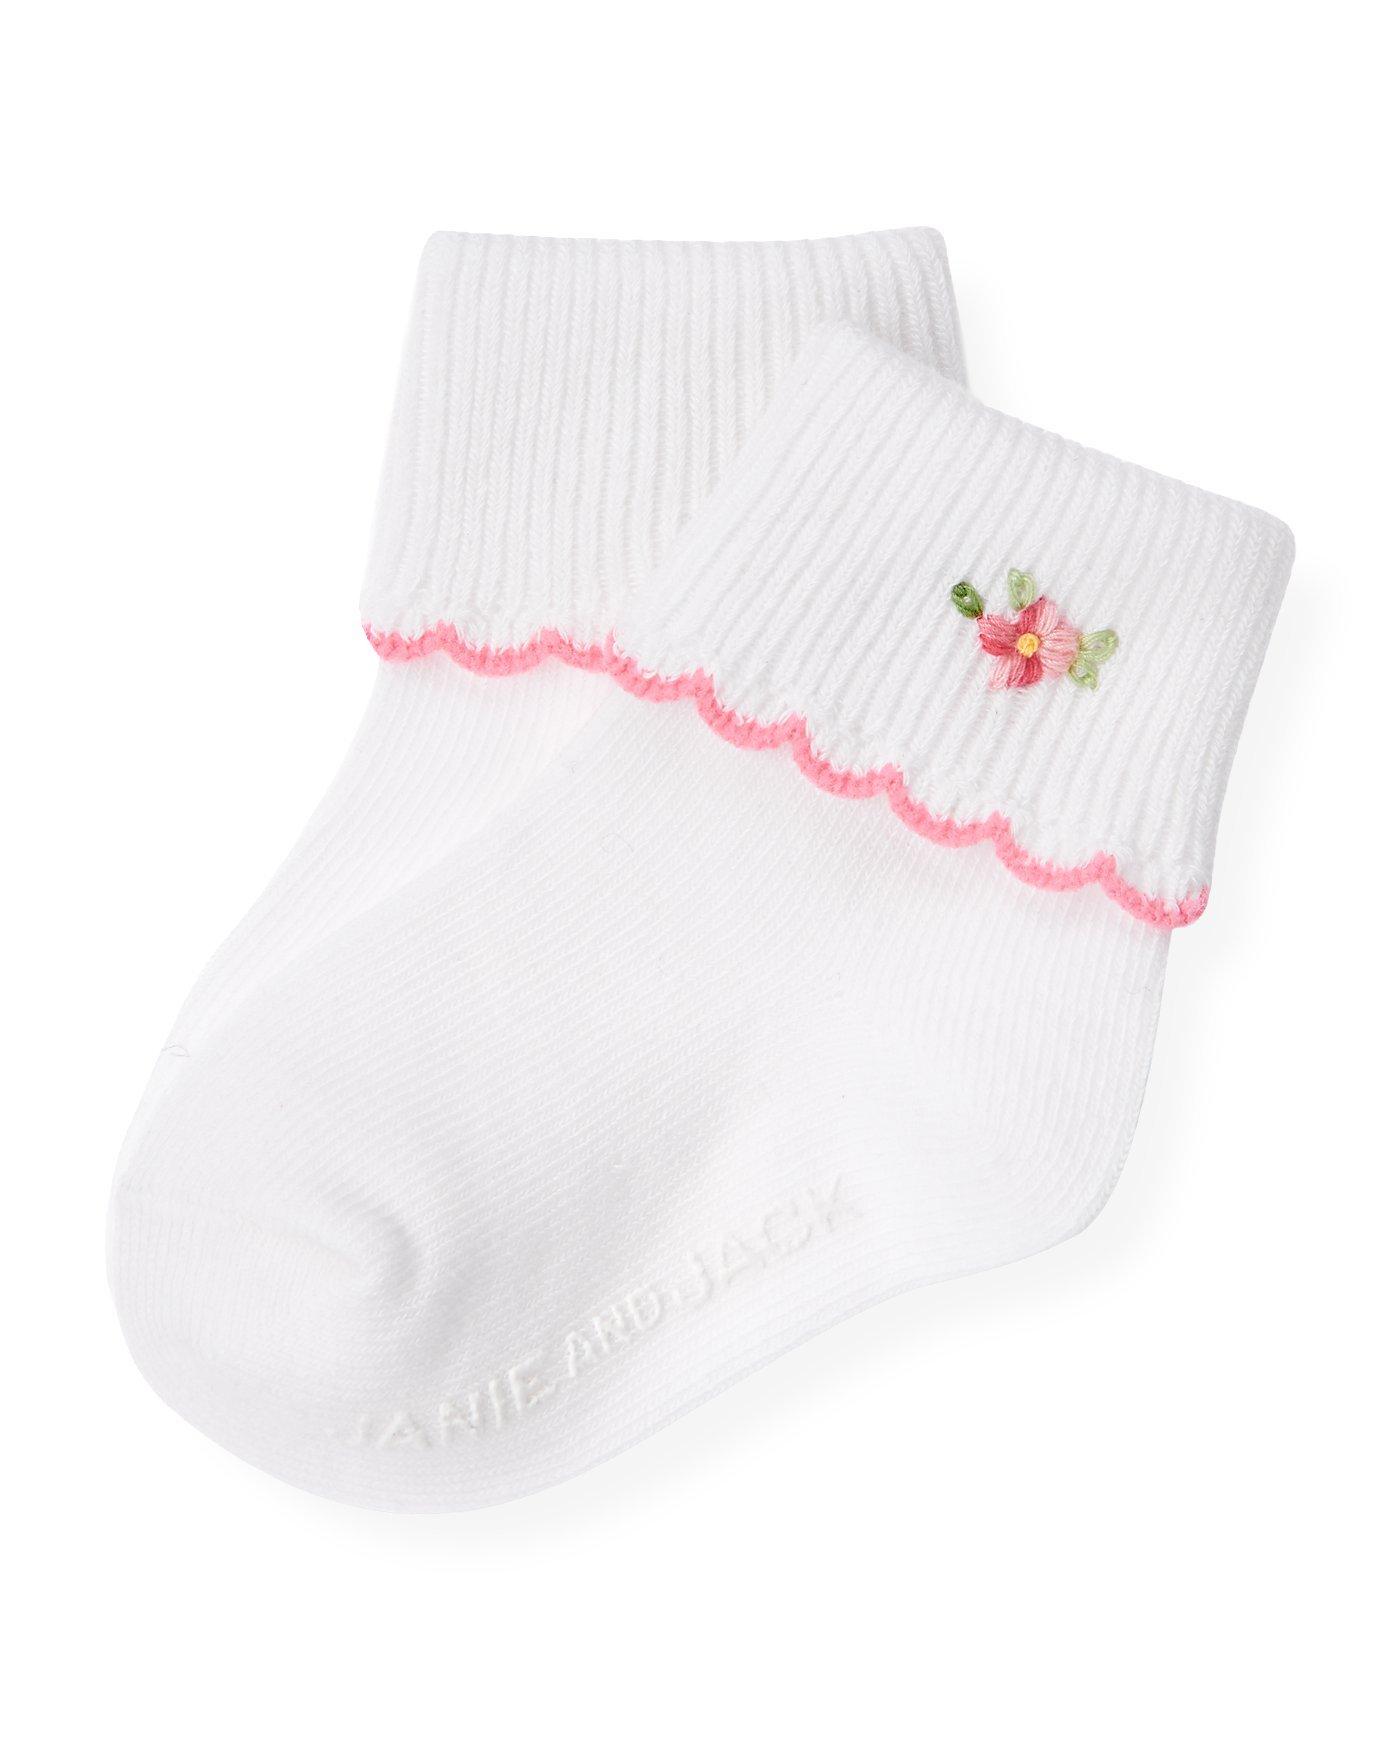 Hand-Embroidered Floral Sock image number 0